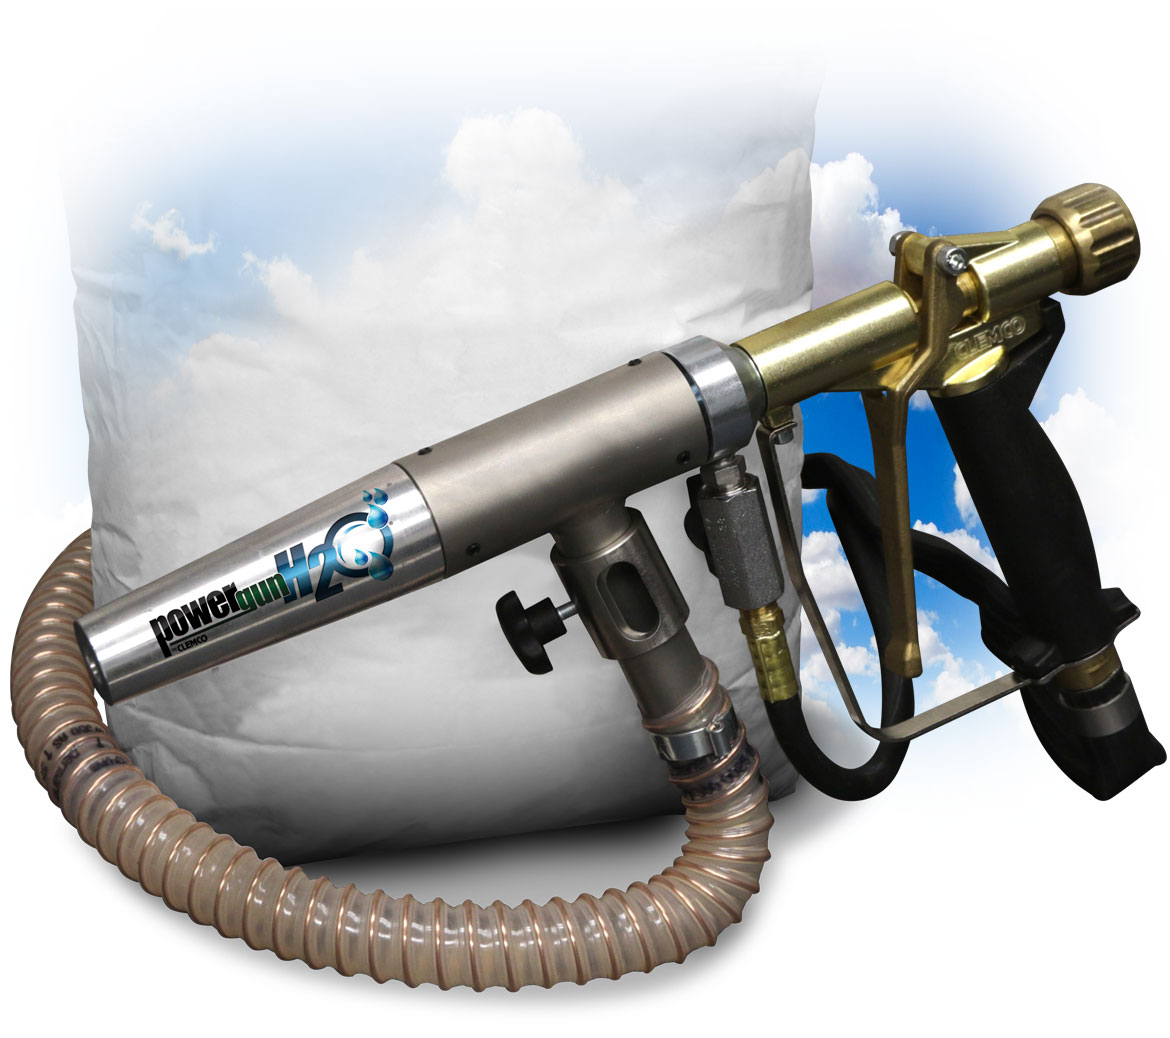 PowerGun H2O for Dustless Blasting, Vapor Blasting and Slurry Blasting